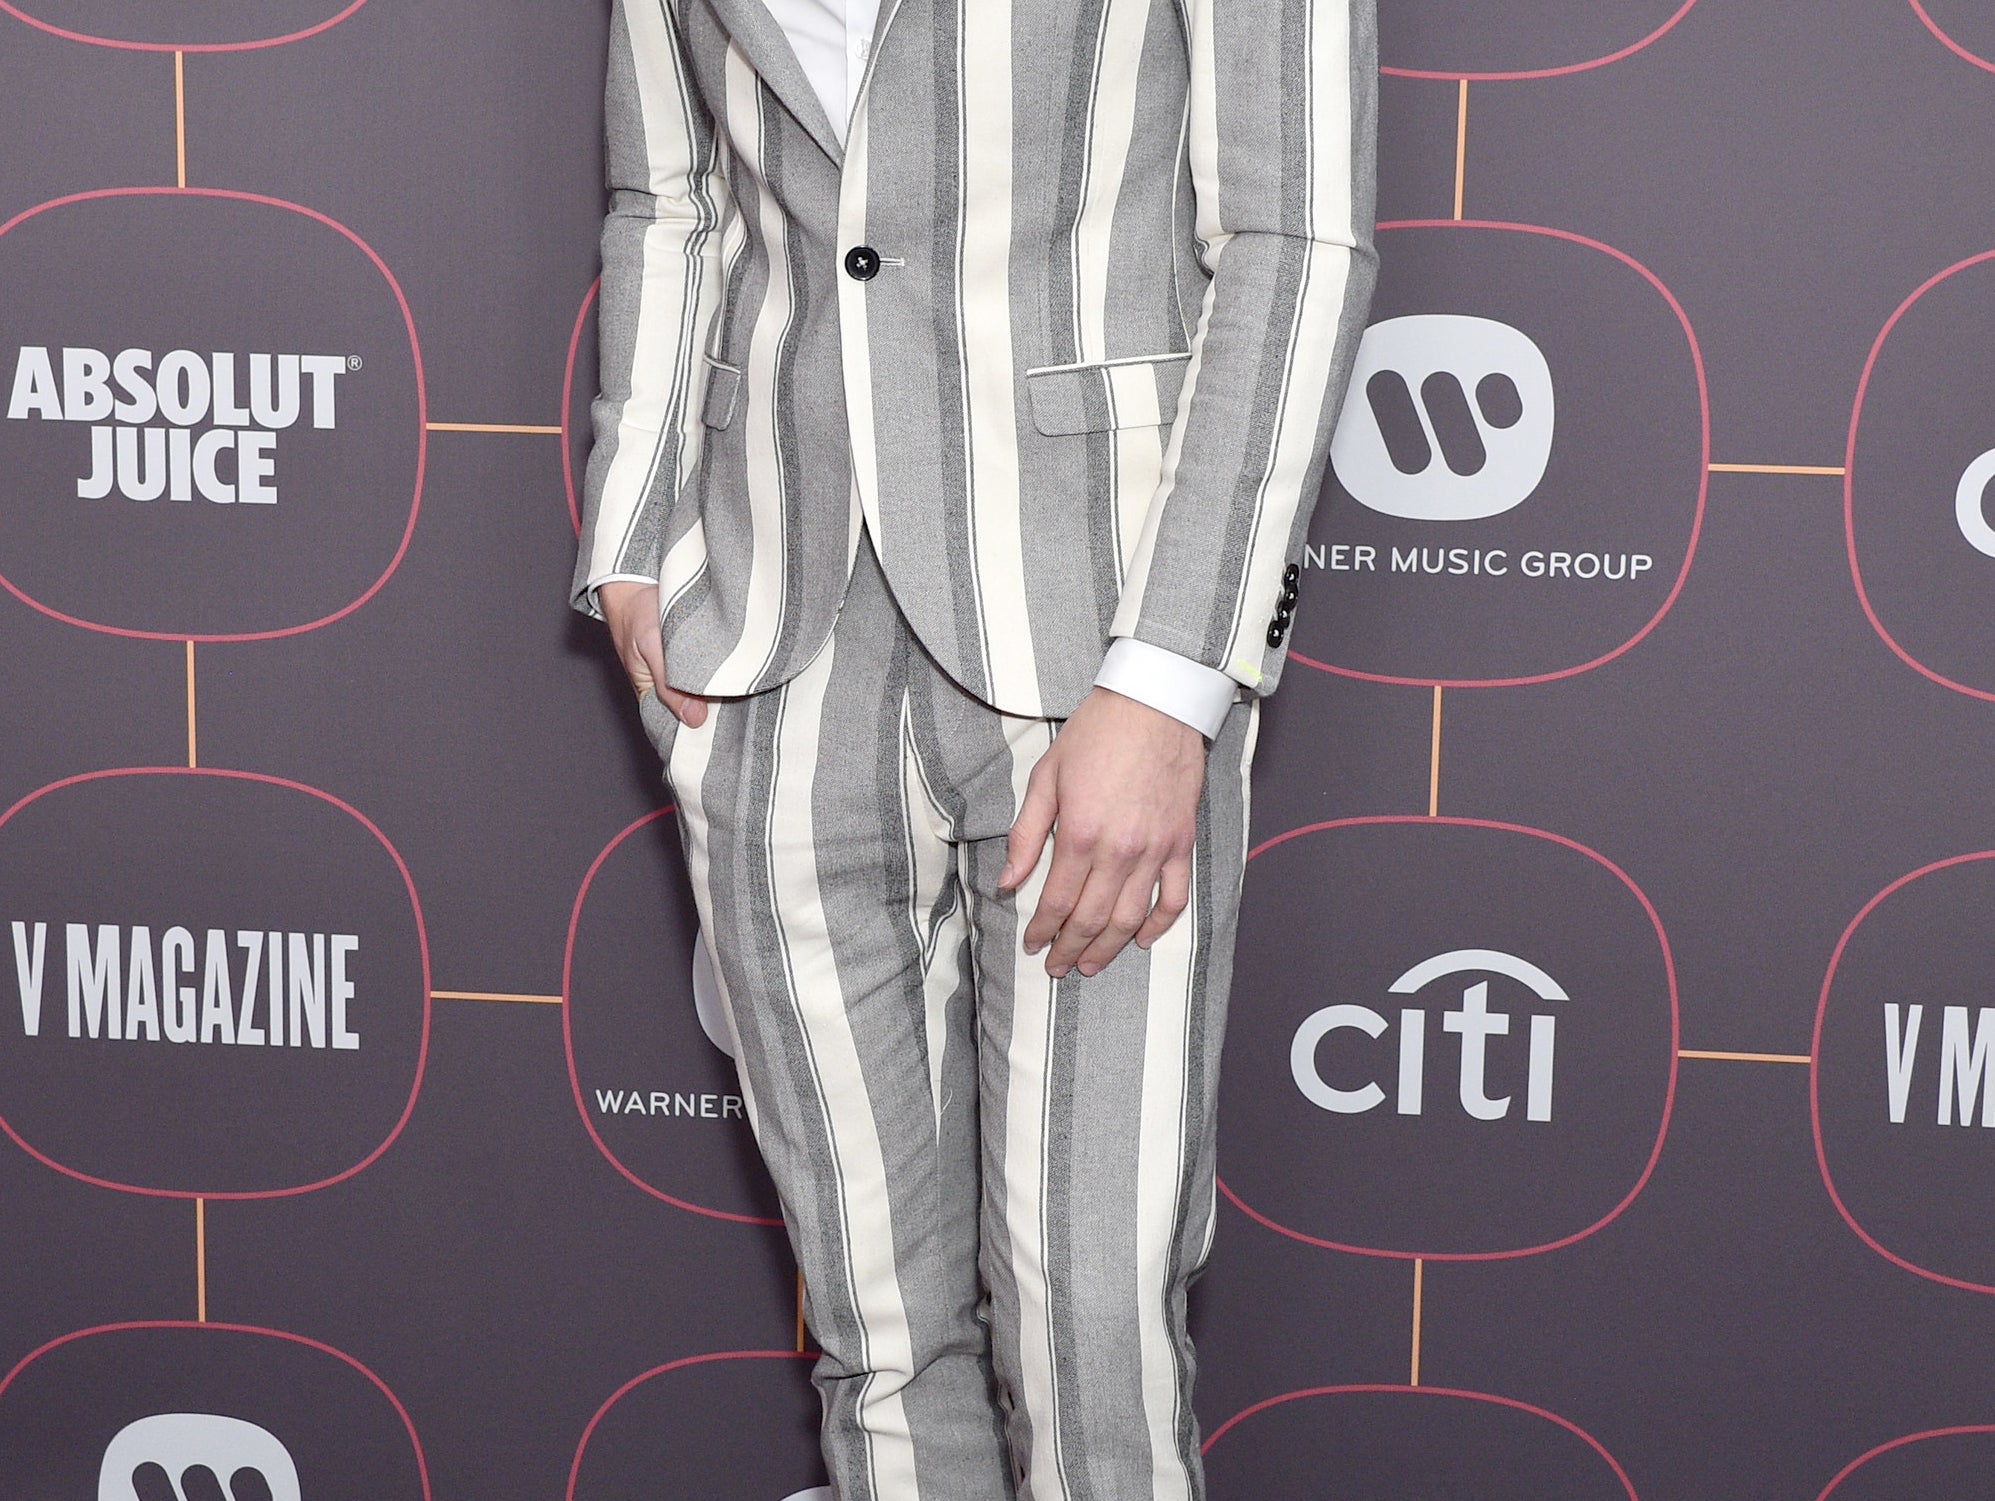 Joshua wears a striped blazer at an event